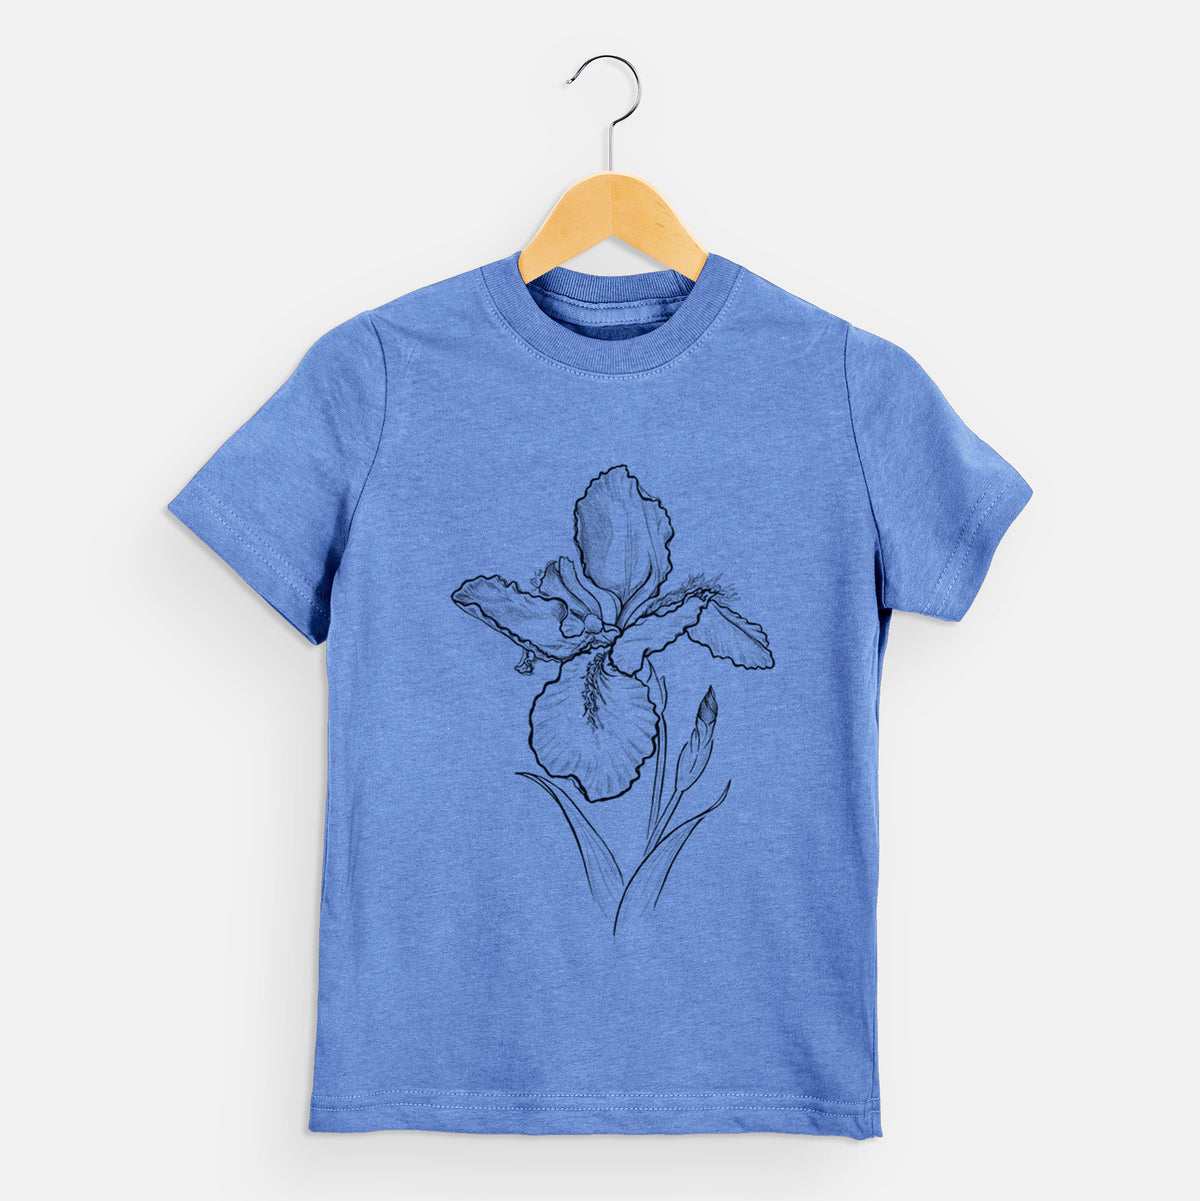 Wall Iris - Iris tectorum - Kids Shirt